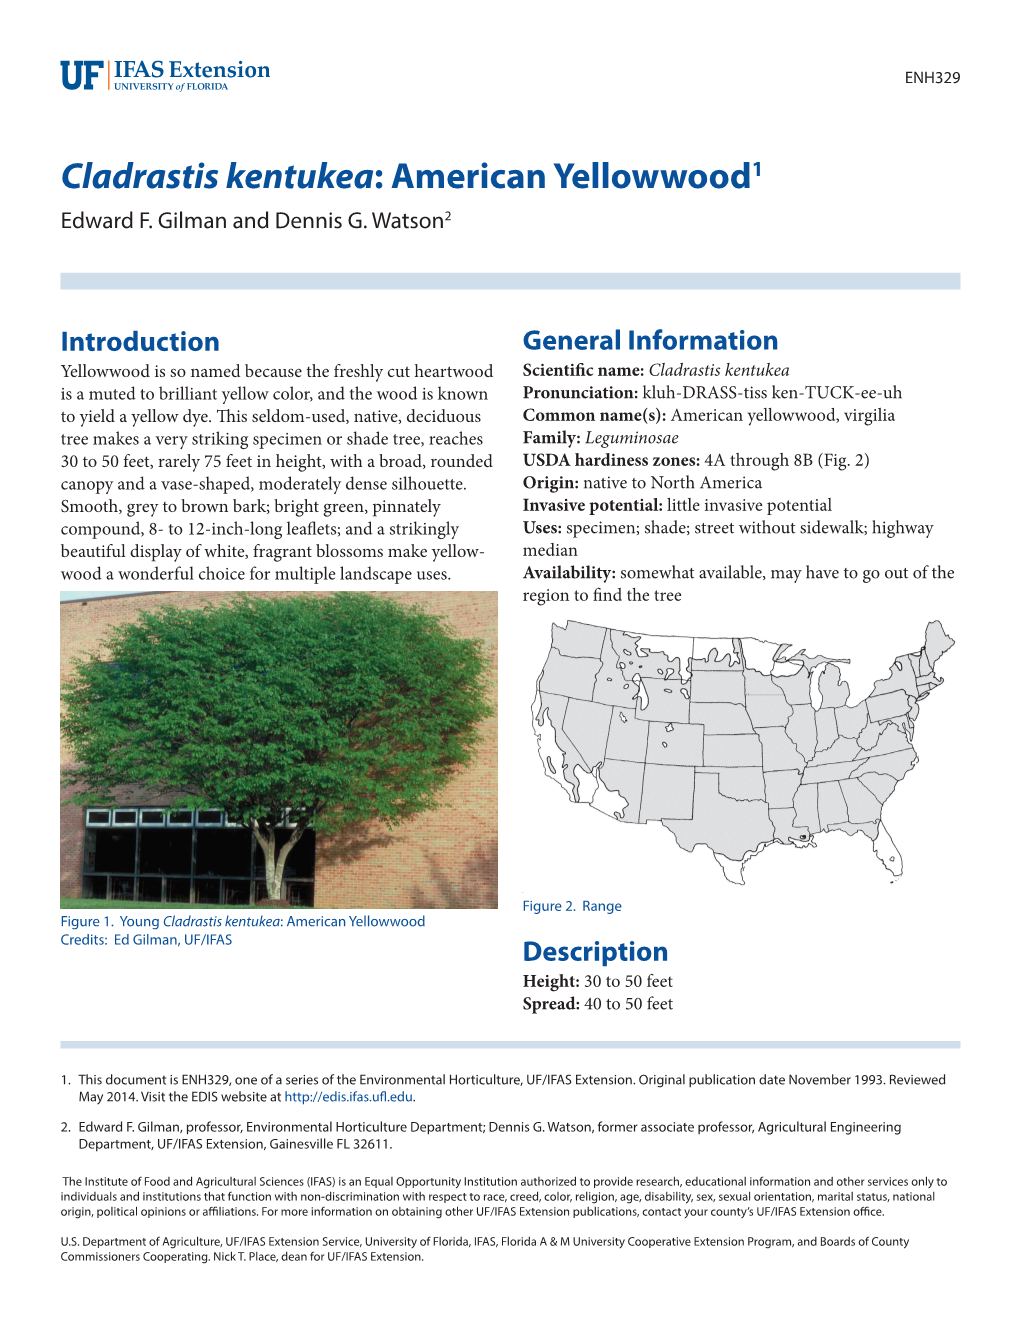 Cladrastis Kentukea: American Yellowwood1 Edward F